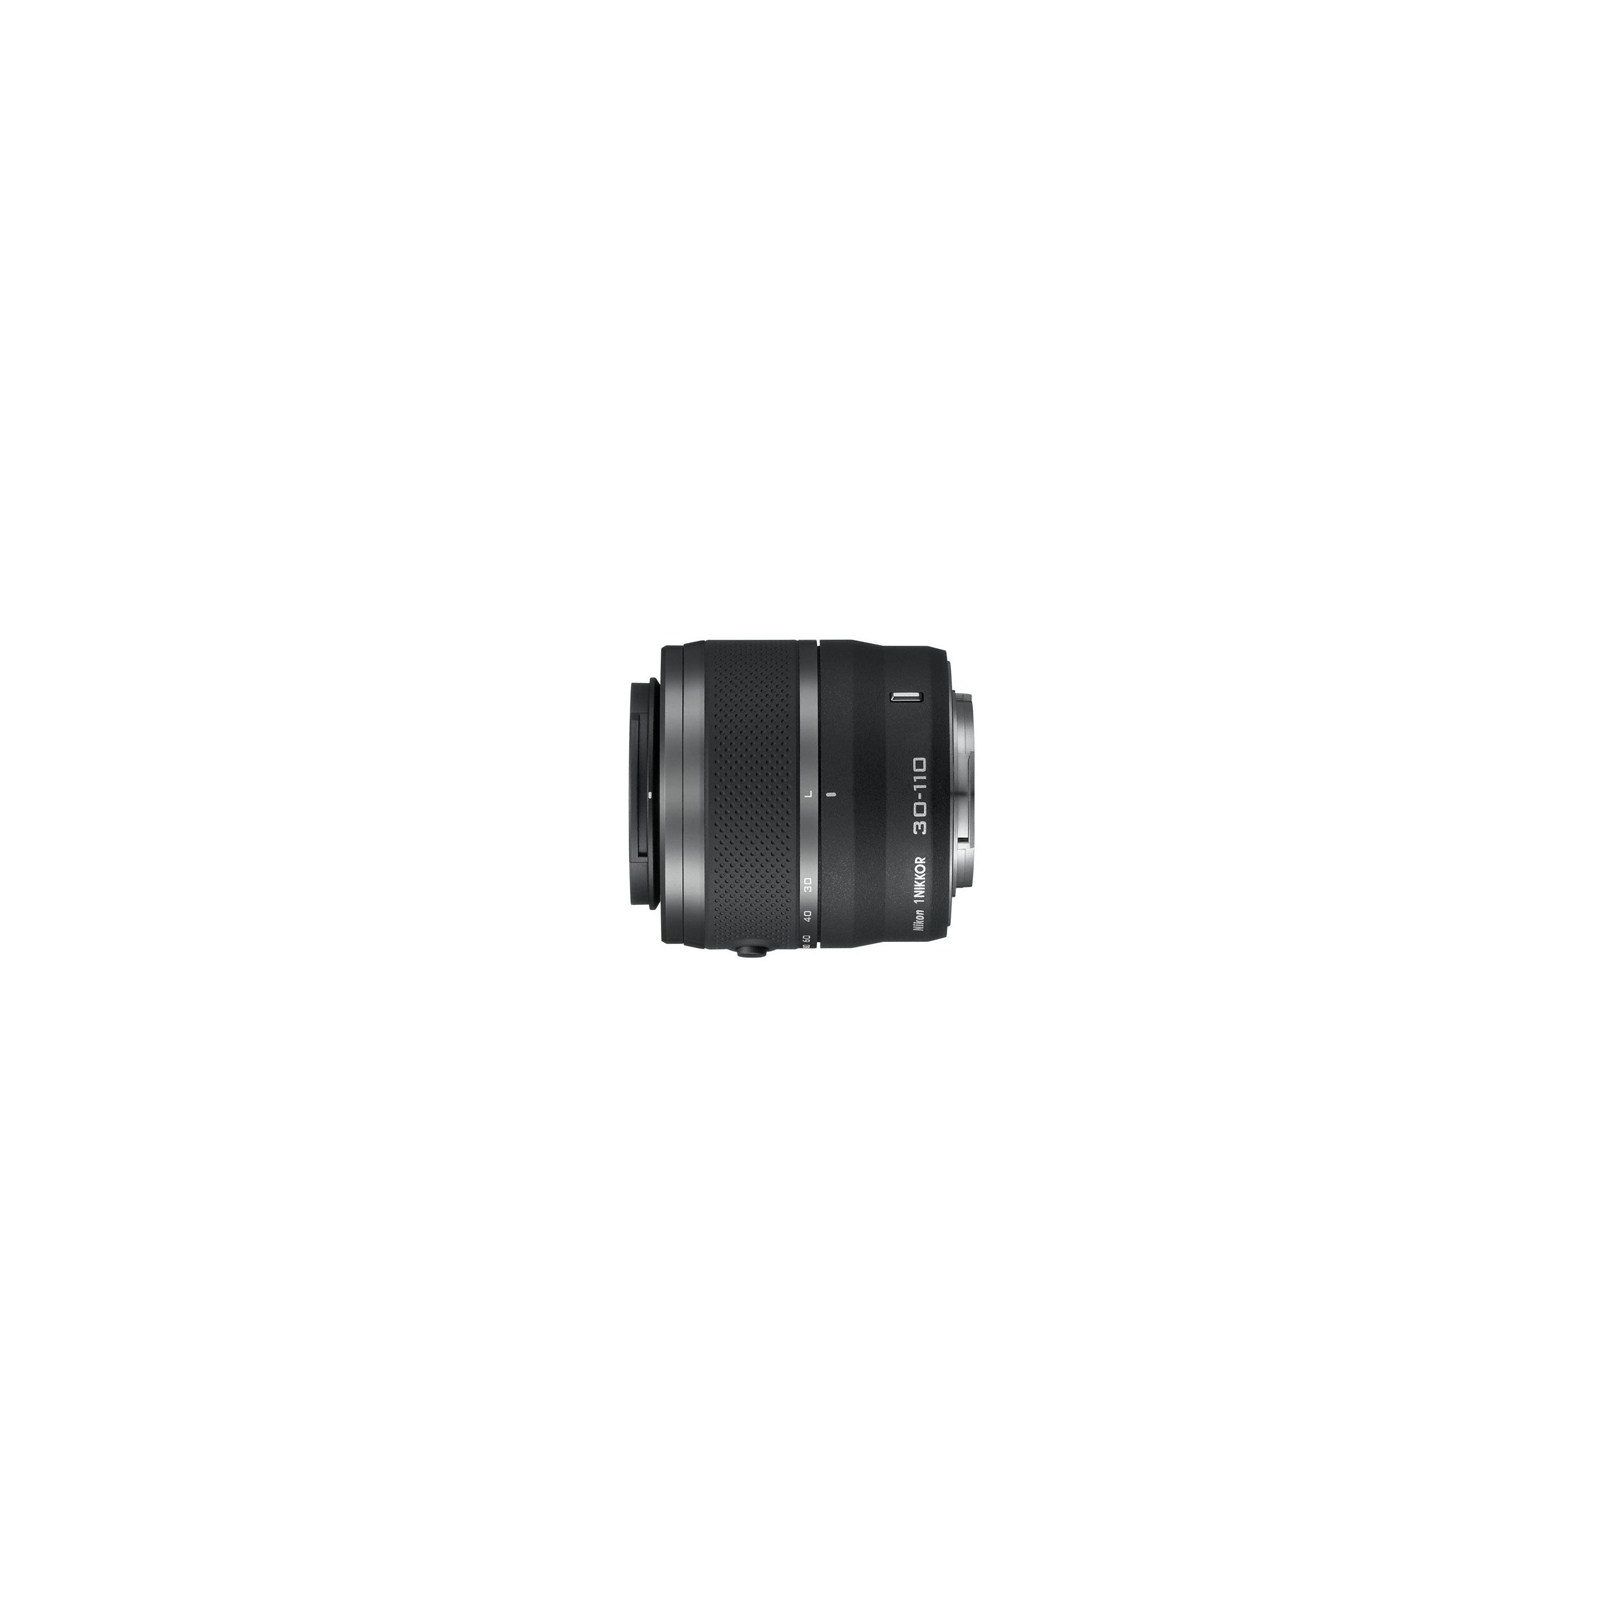 Об'єктив Nikon 1 Nikkor 30-110mm f/3.8-5.6 VR black (JVA703DA)